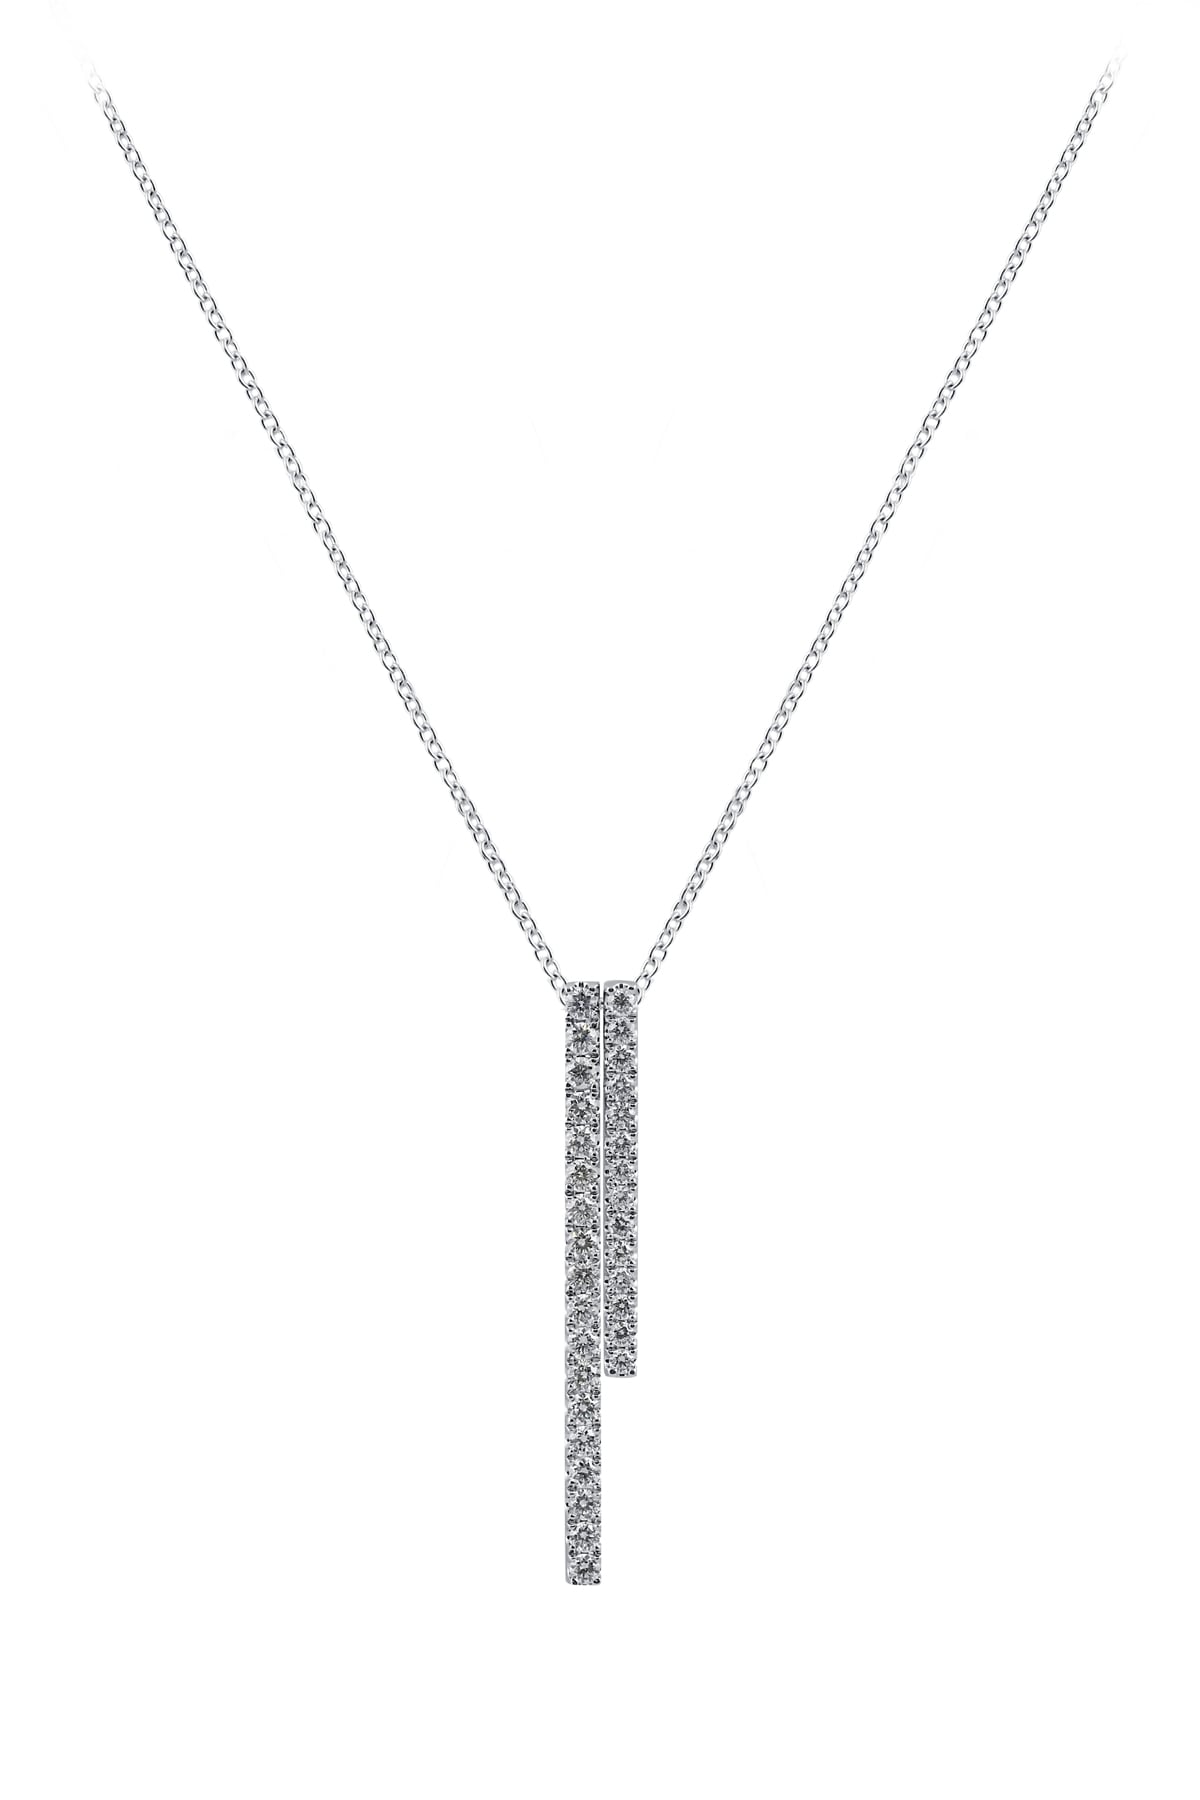 White Gold Double Diamond Drop Pendant with Chain from LeGassick Fine Jewellery, Gold Coast, Australia.